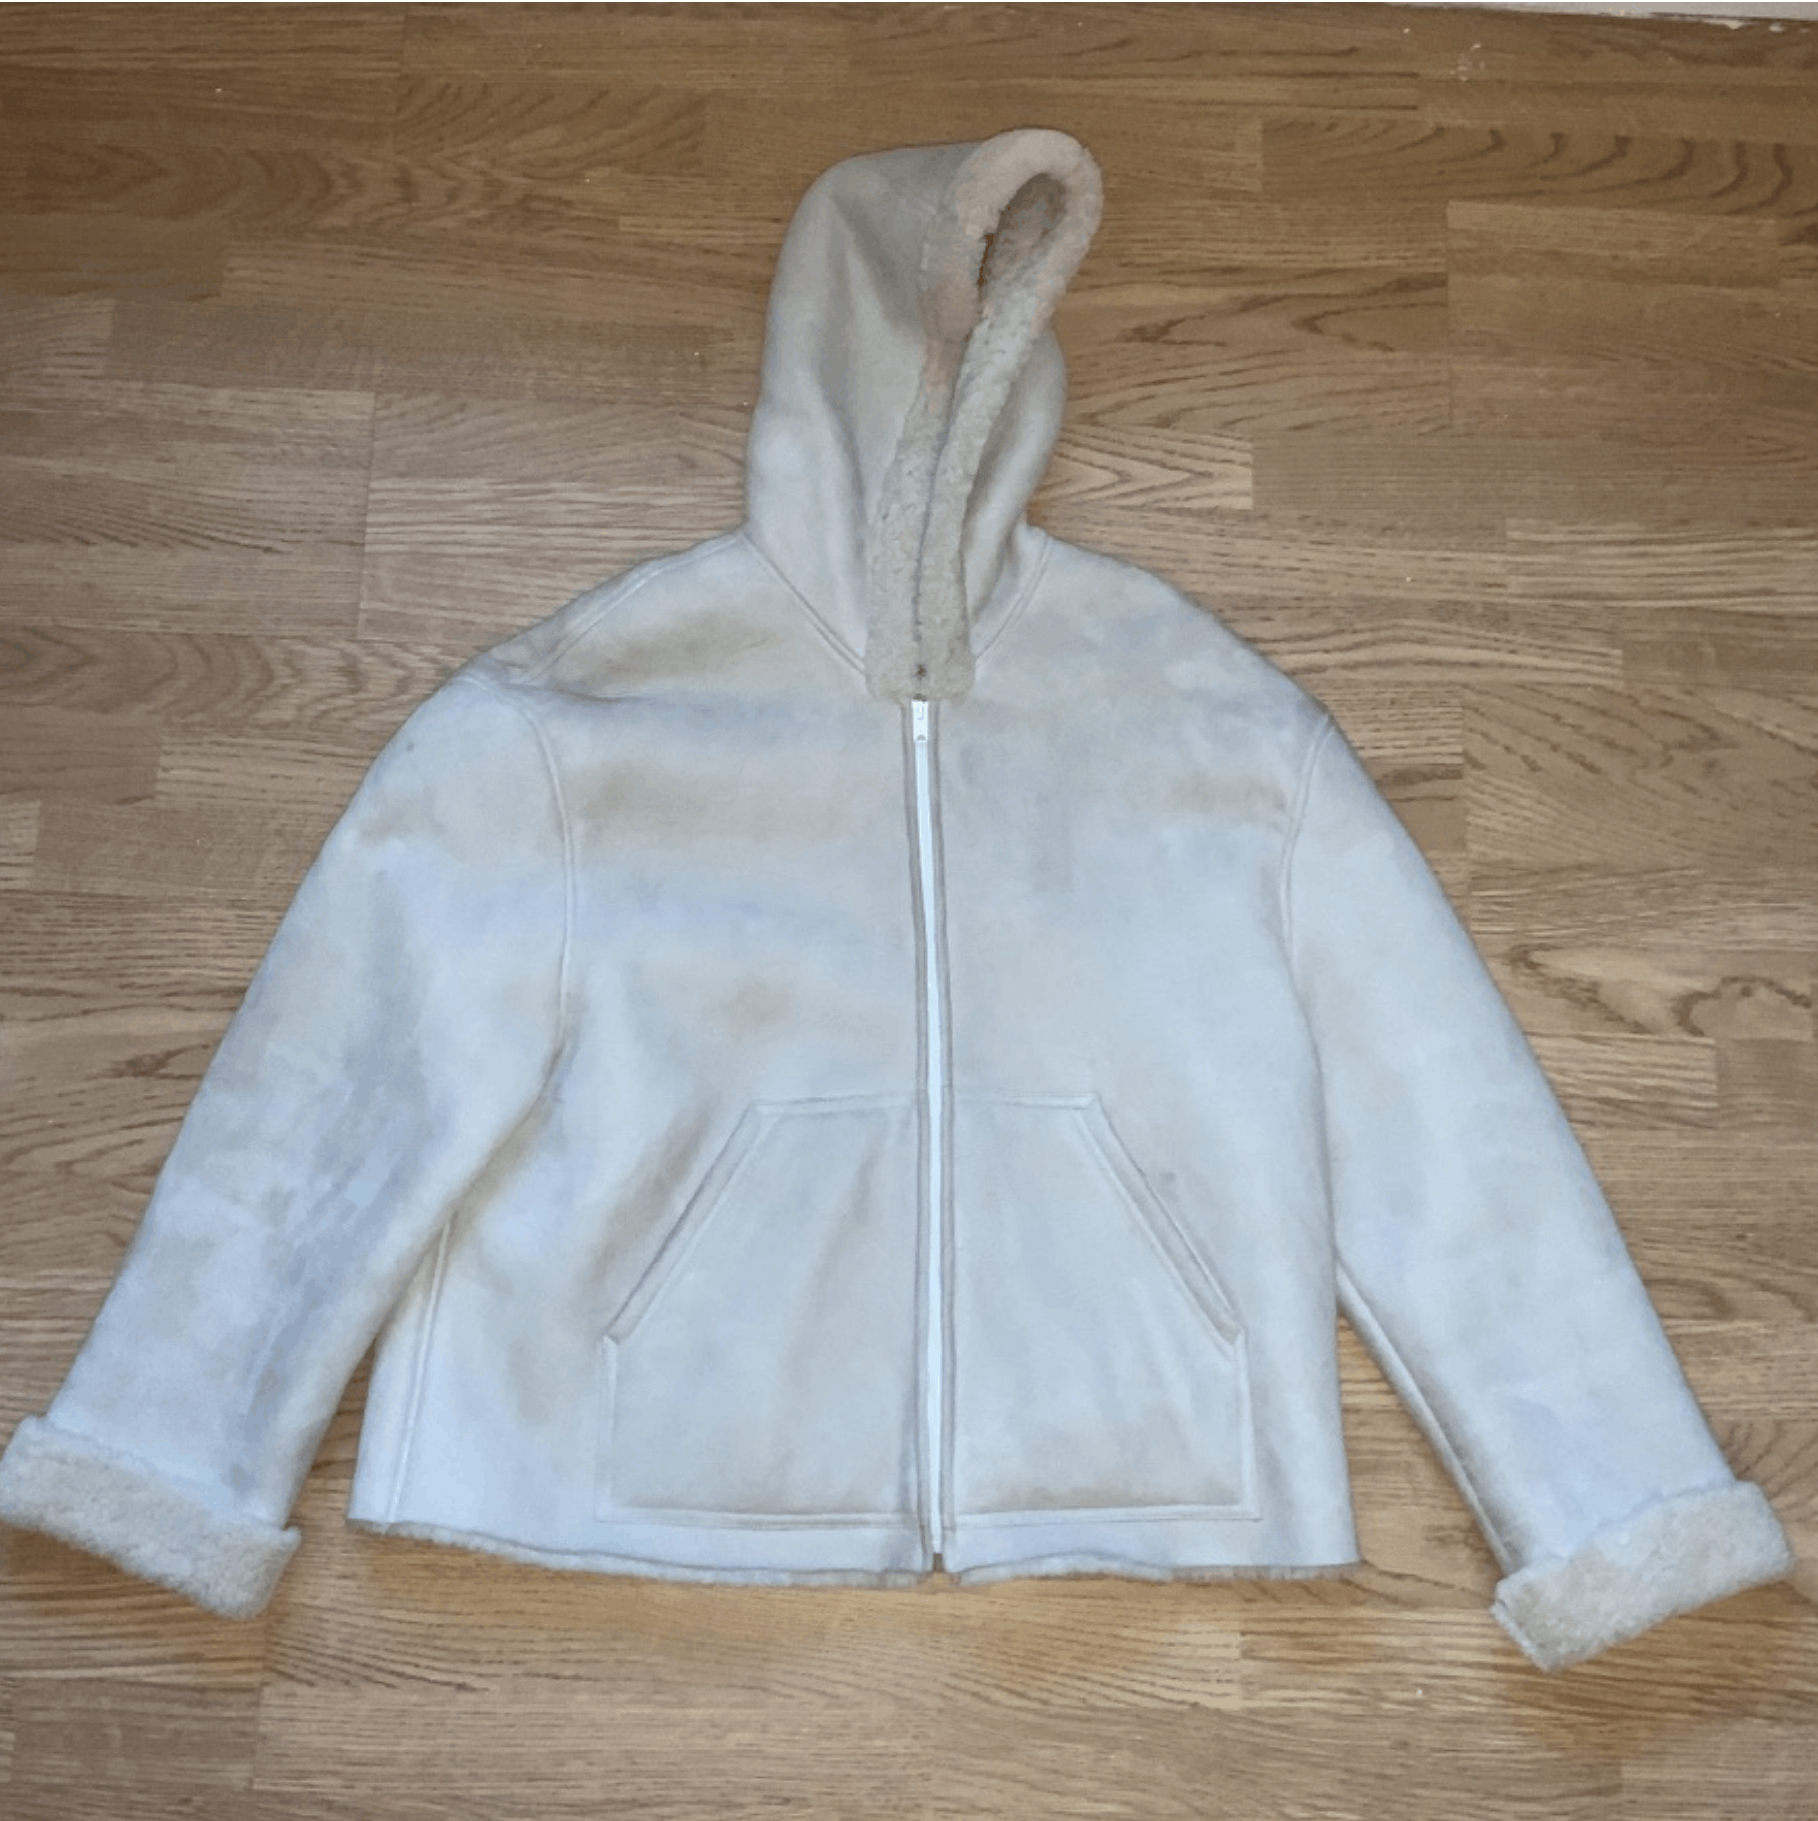 Yeezy Shearling Jacket | Grailed